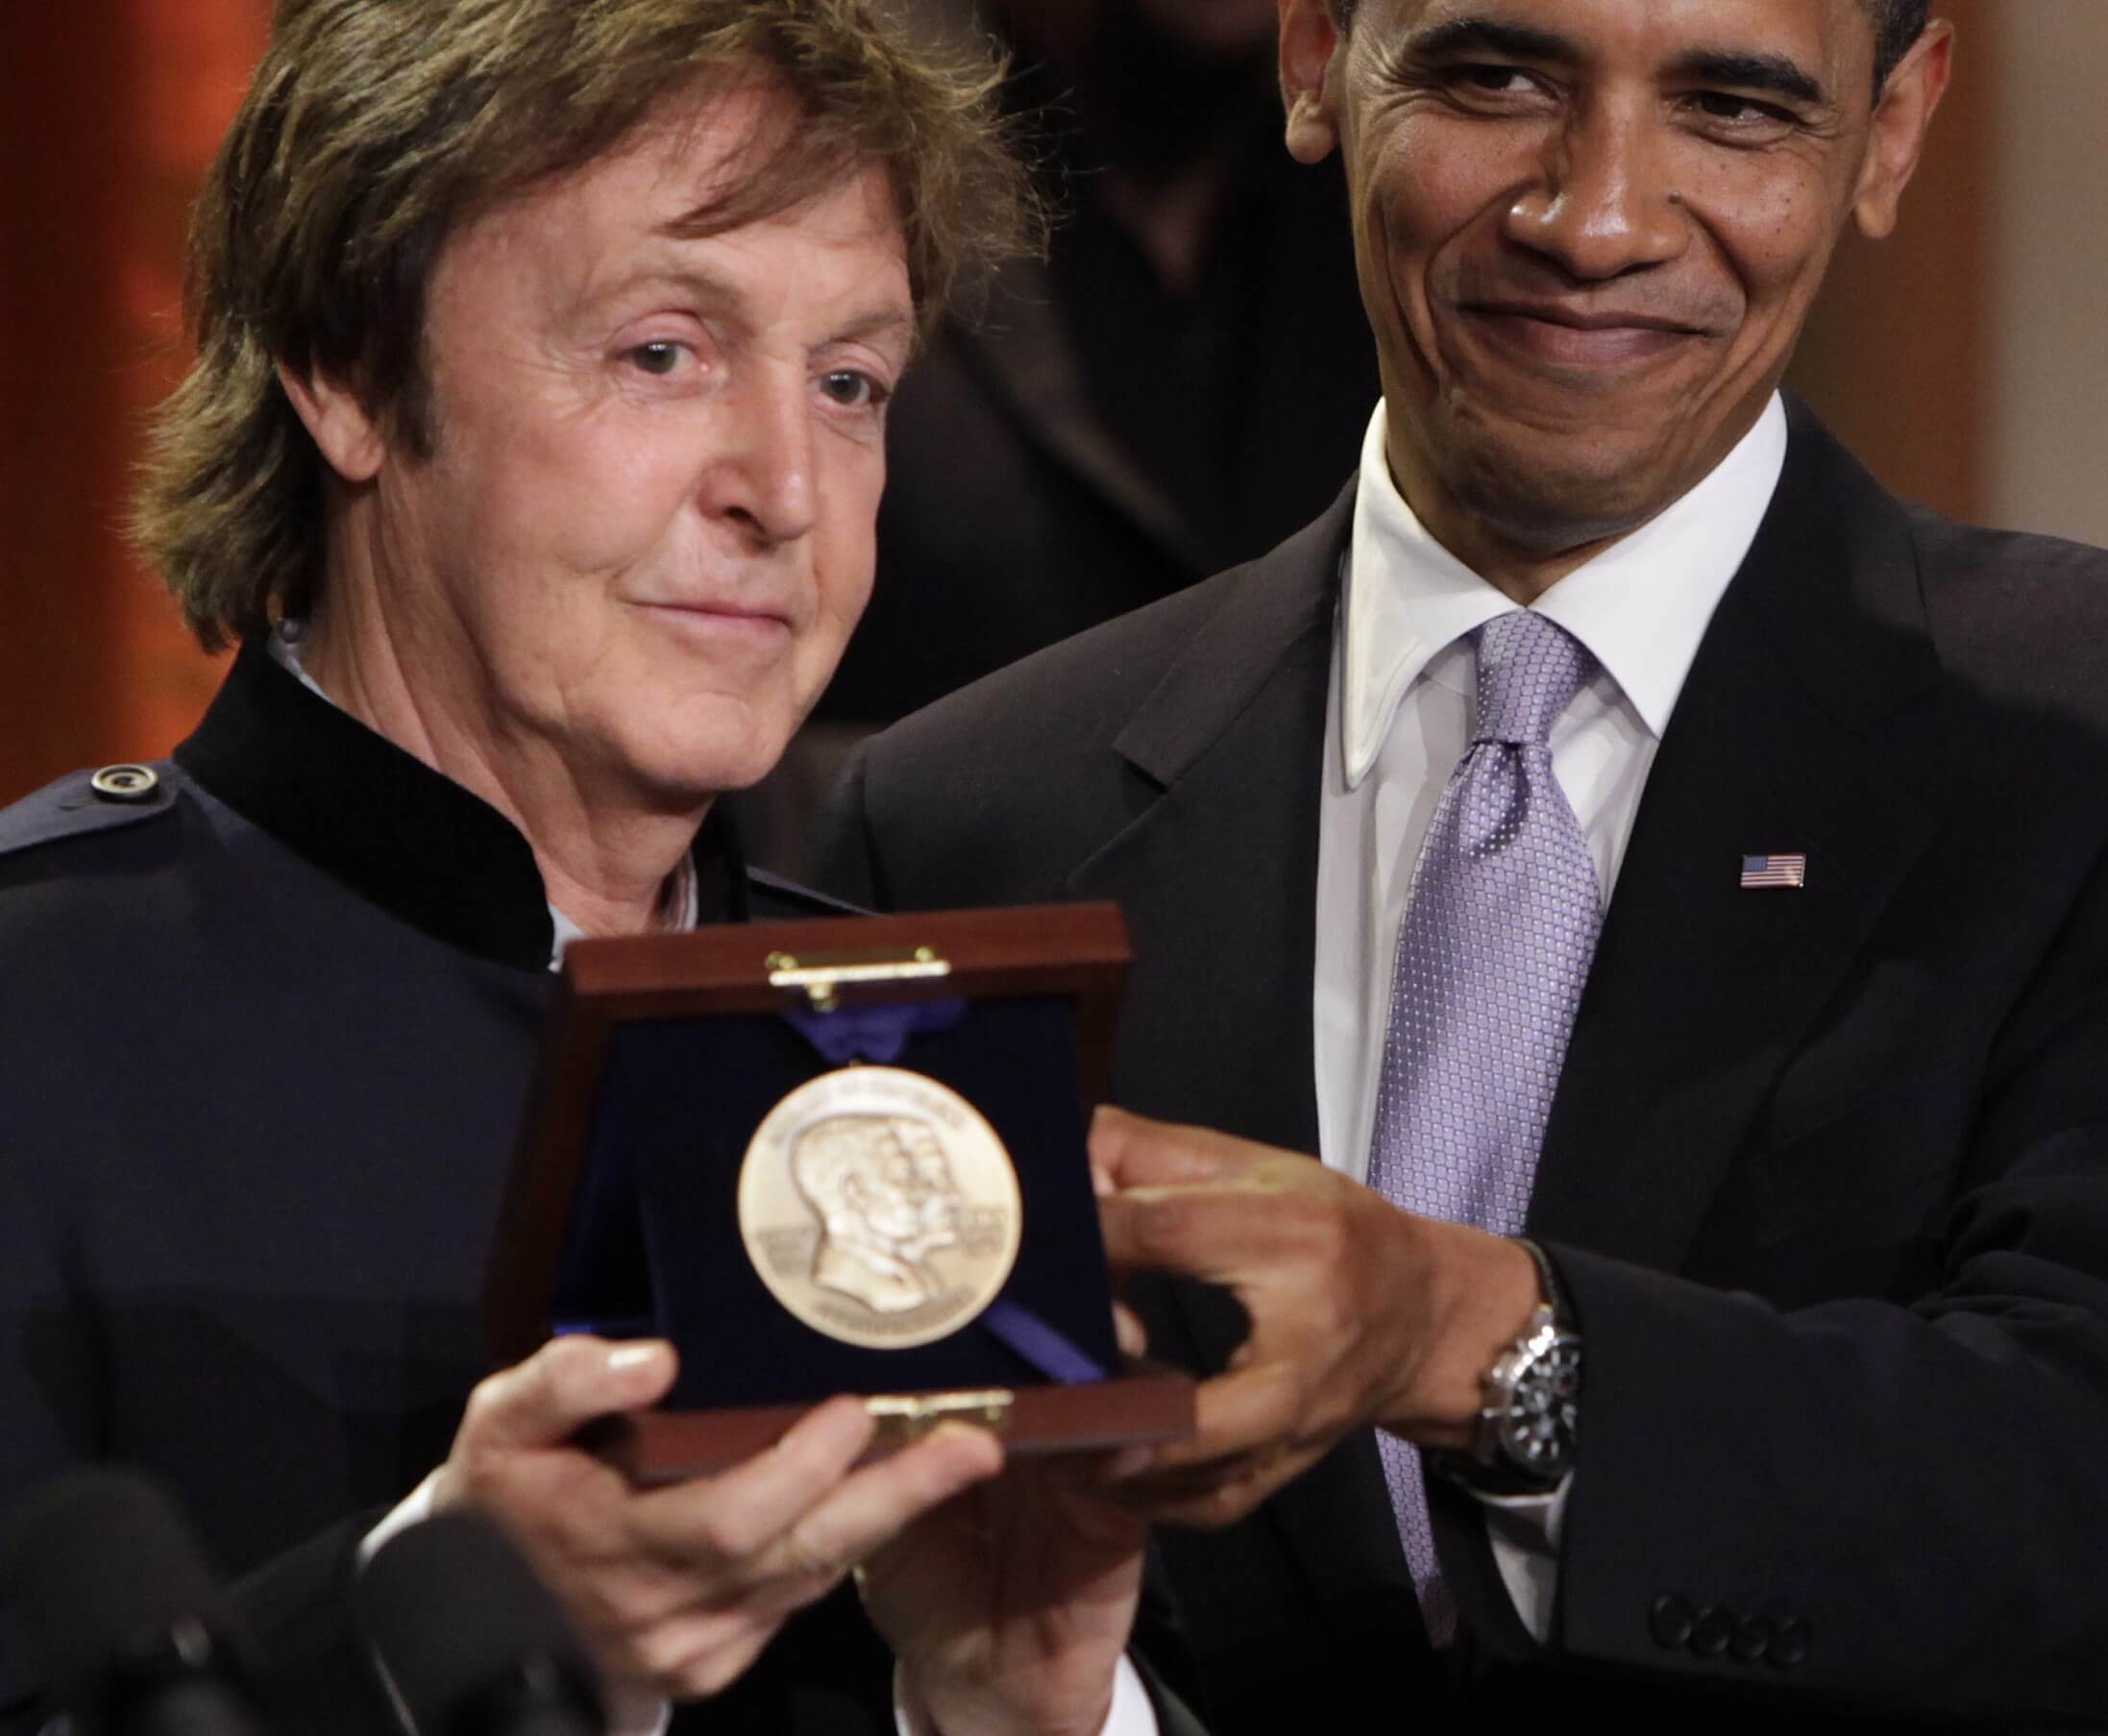 Barack Obama handing Paul McCartney an award